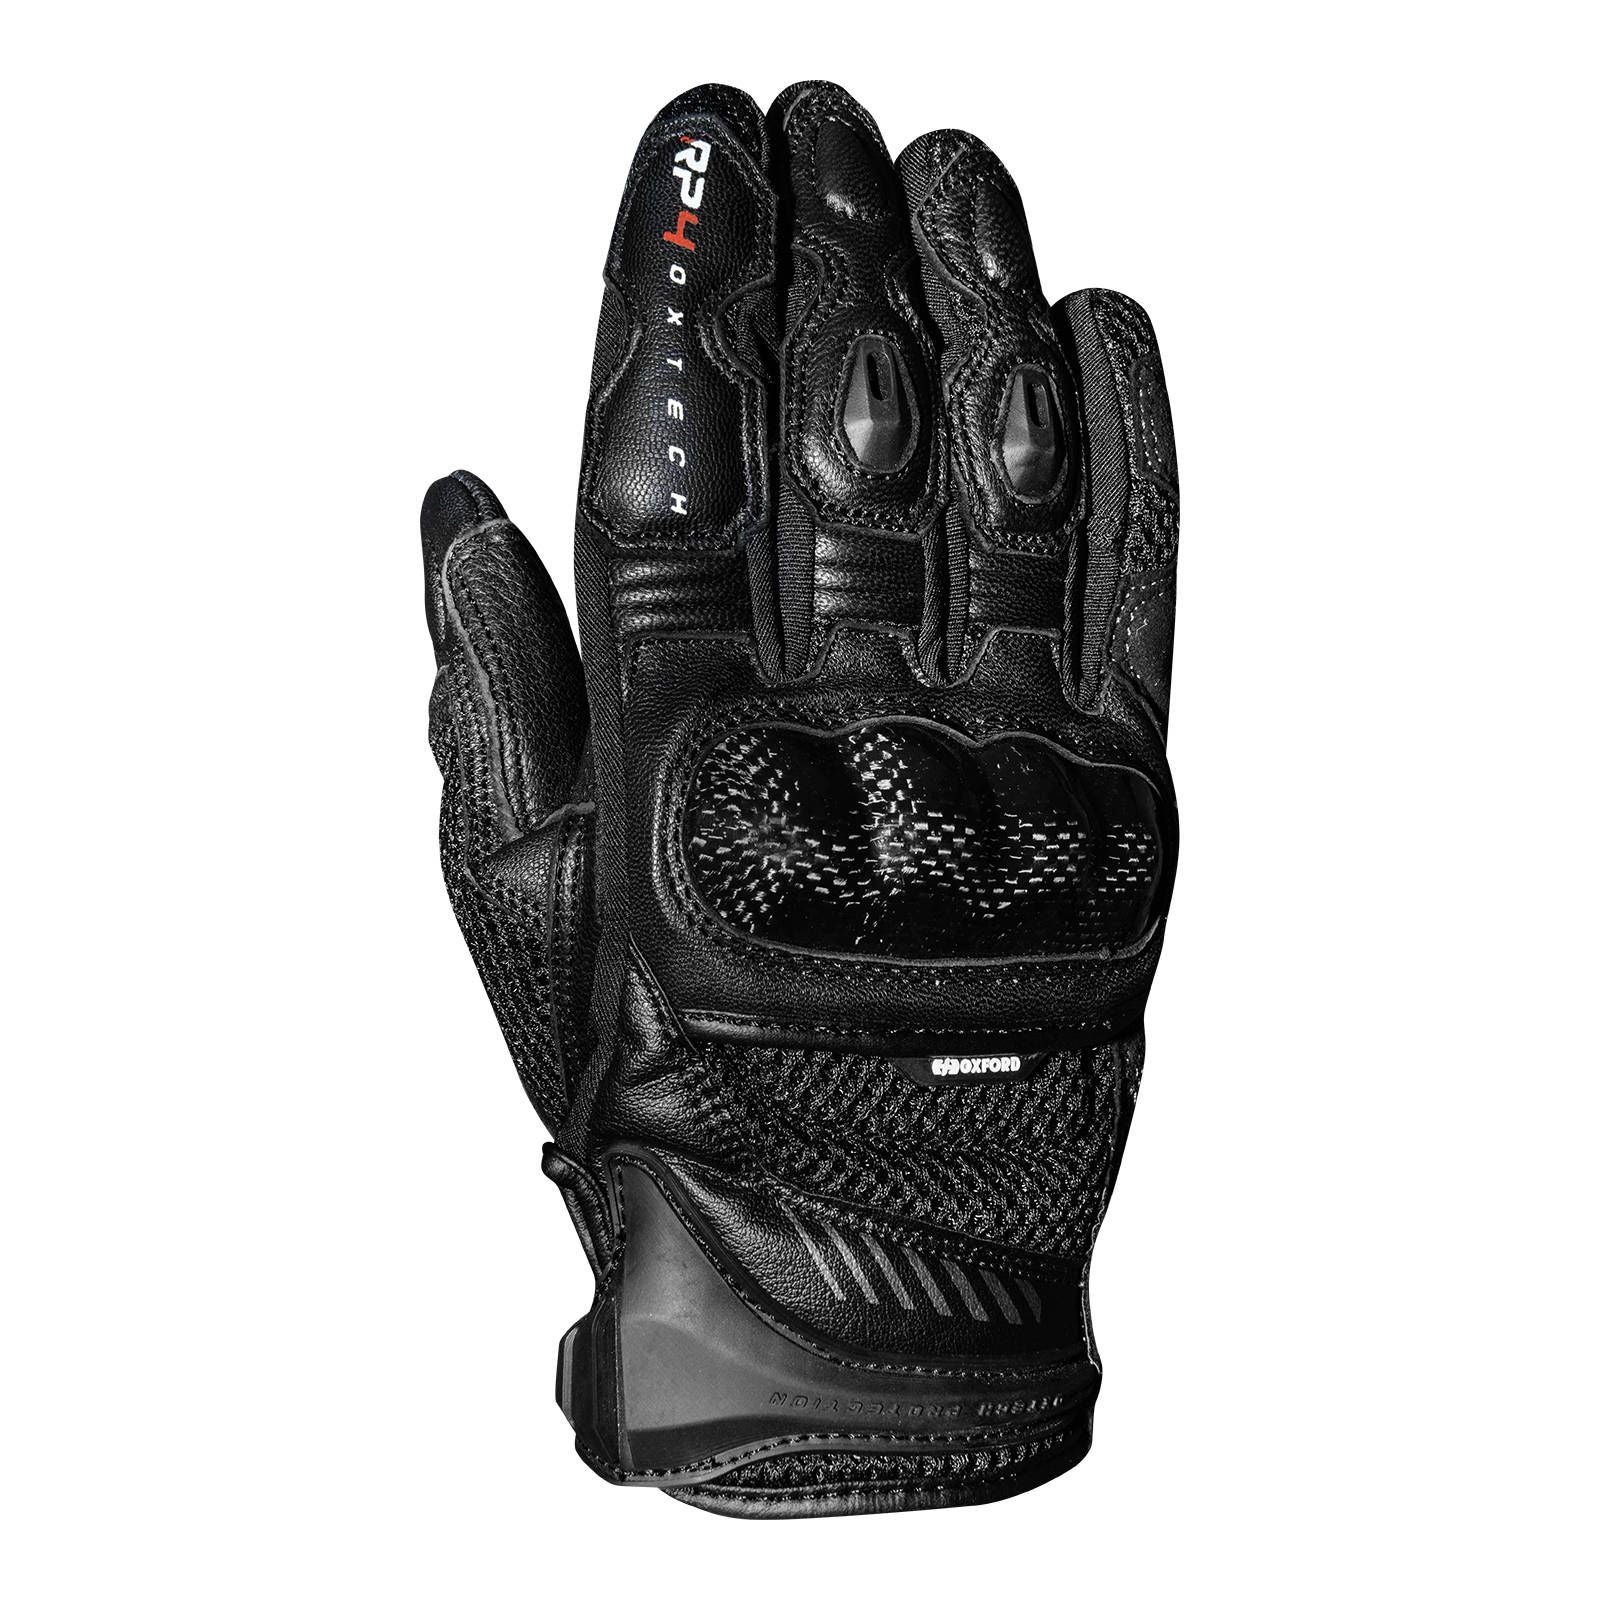 New OXFORD RP-4 Short Leather Sport Glove - Black (L) #OXGM173101L